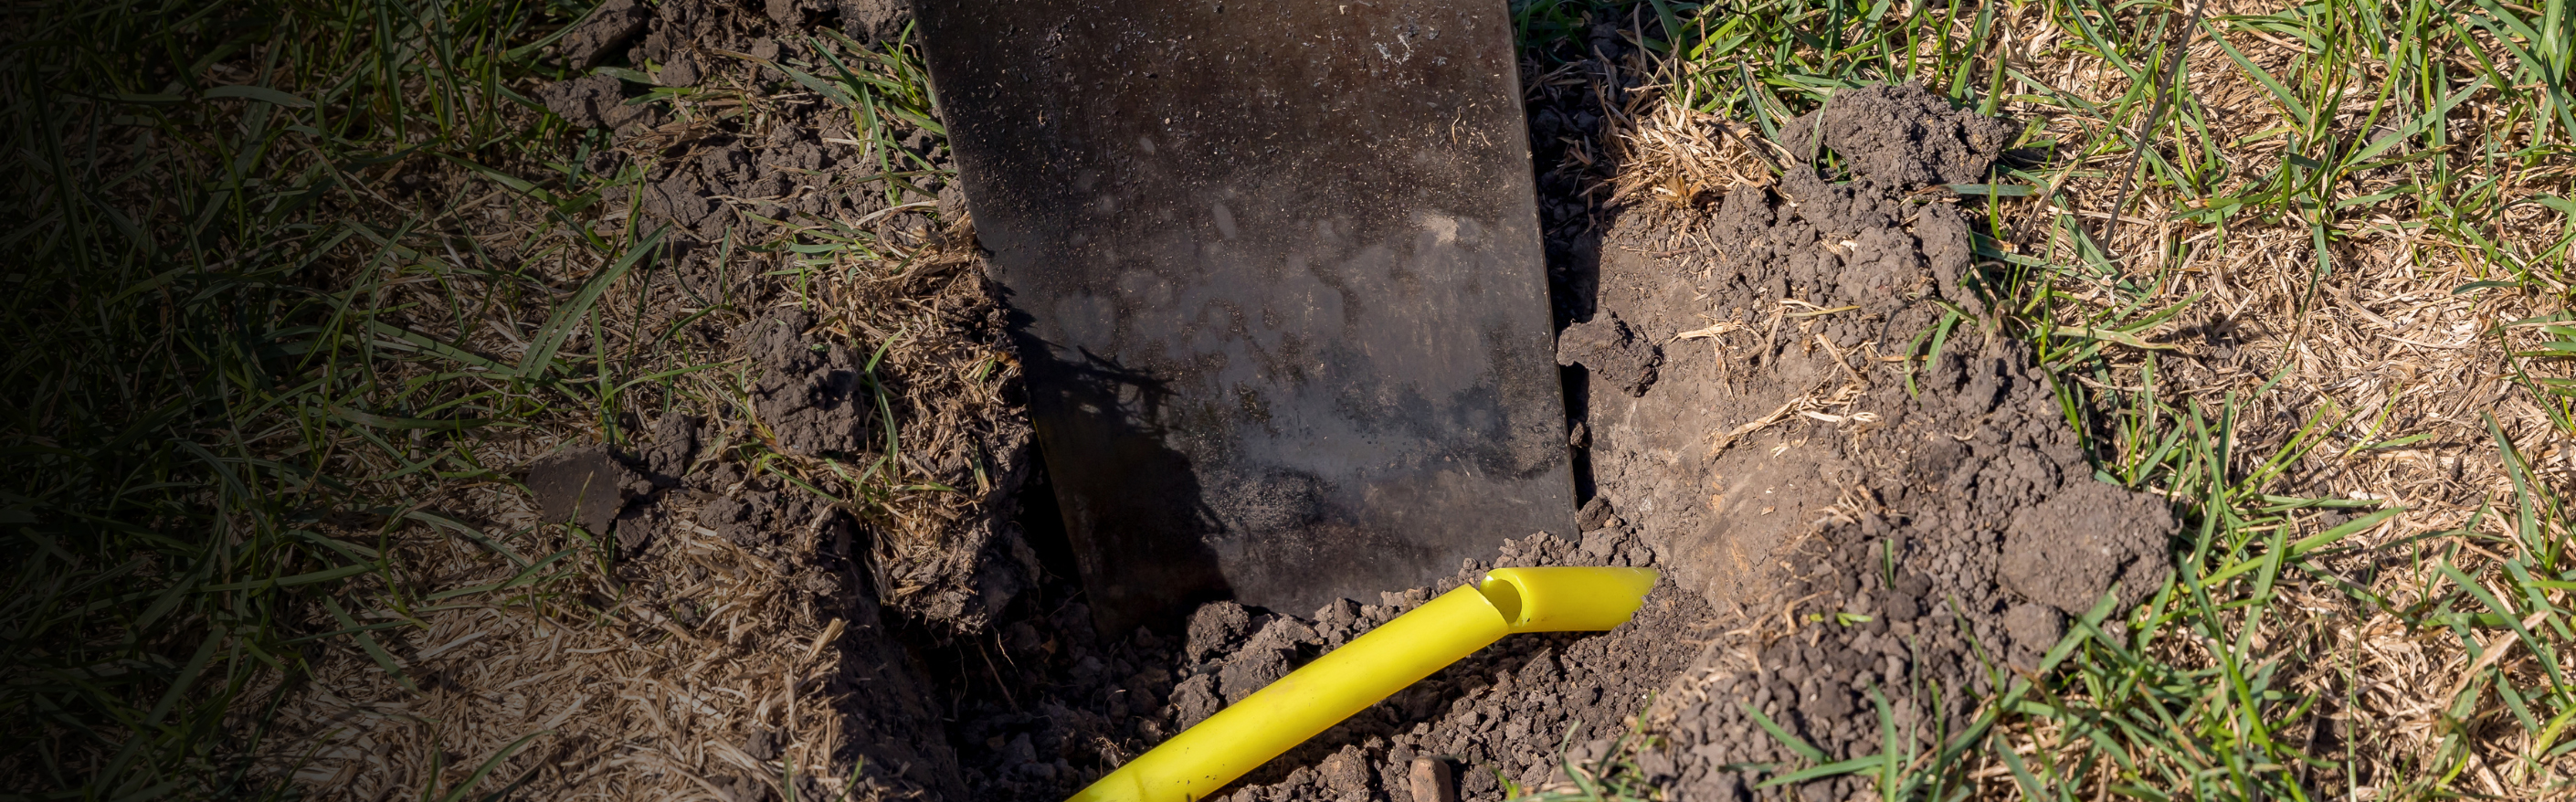 shovel digging into ground